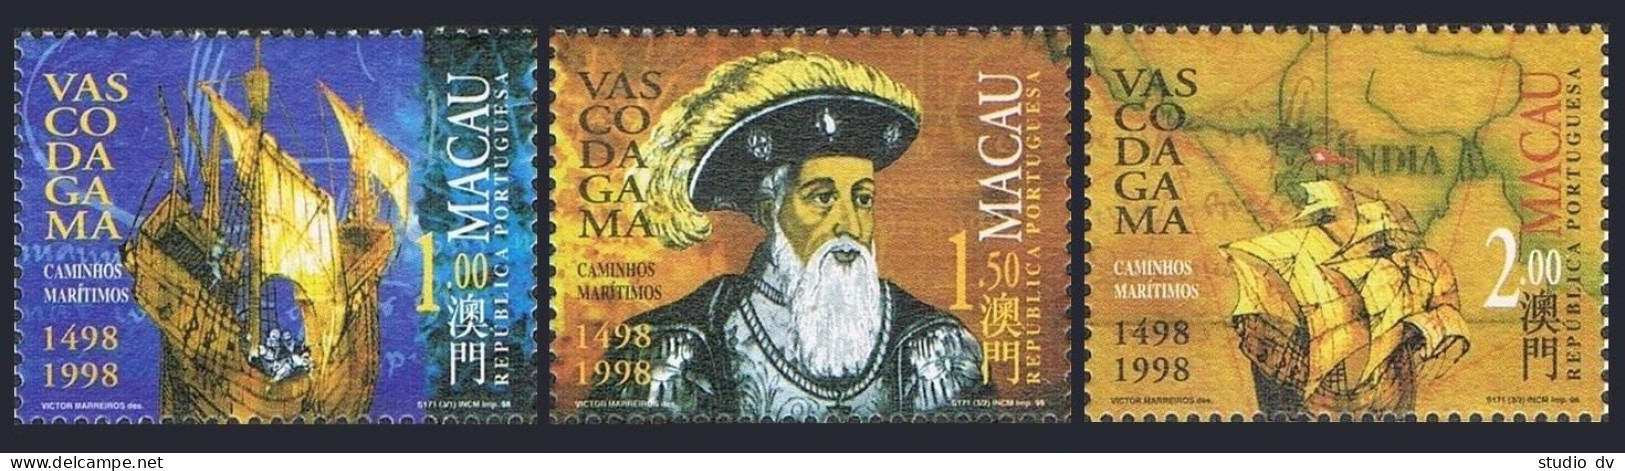 Macao 943-945a Strip, 946, 946a Overprinted, MNH. Vasco Da Gama, 1498-1998. - Ungebraucht